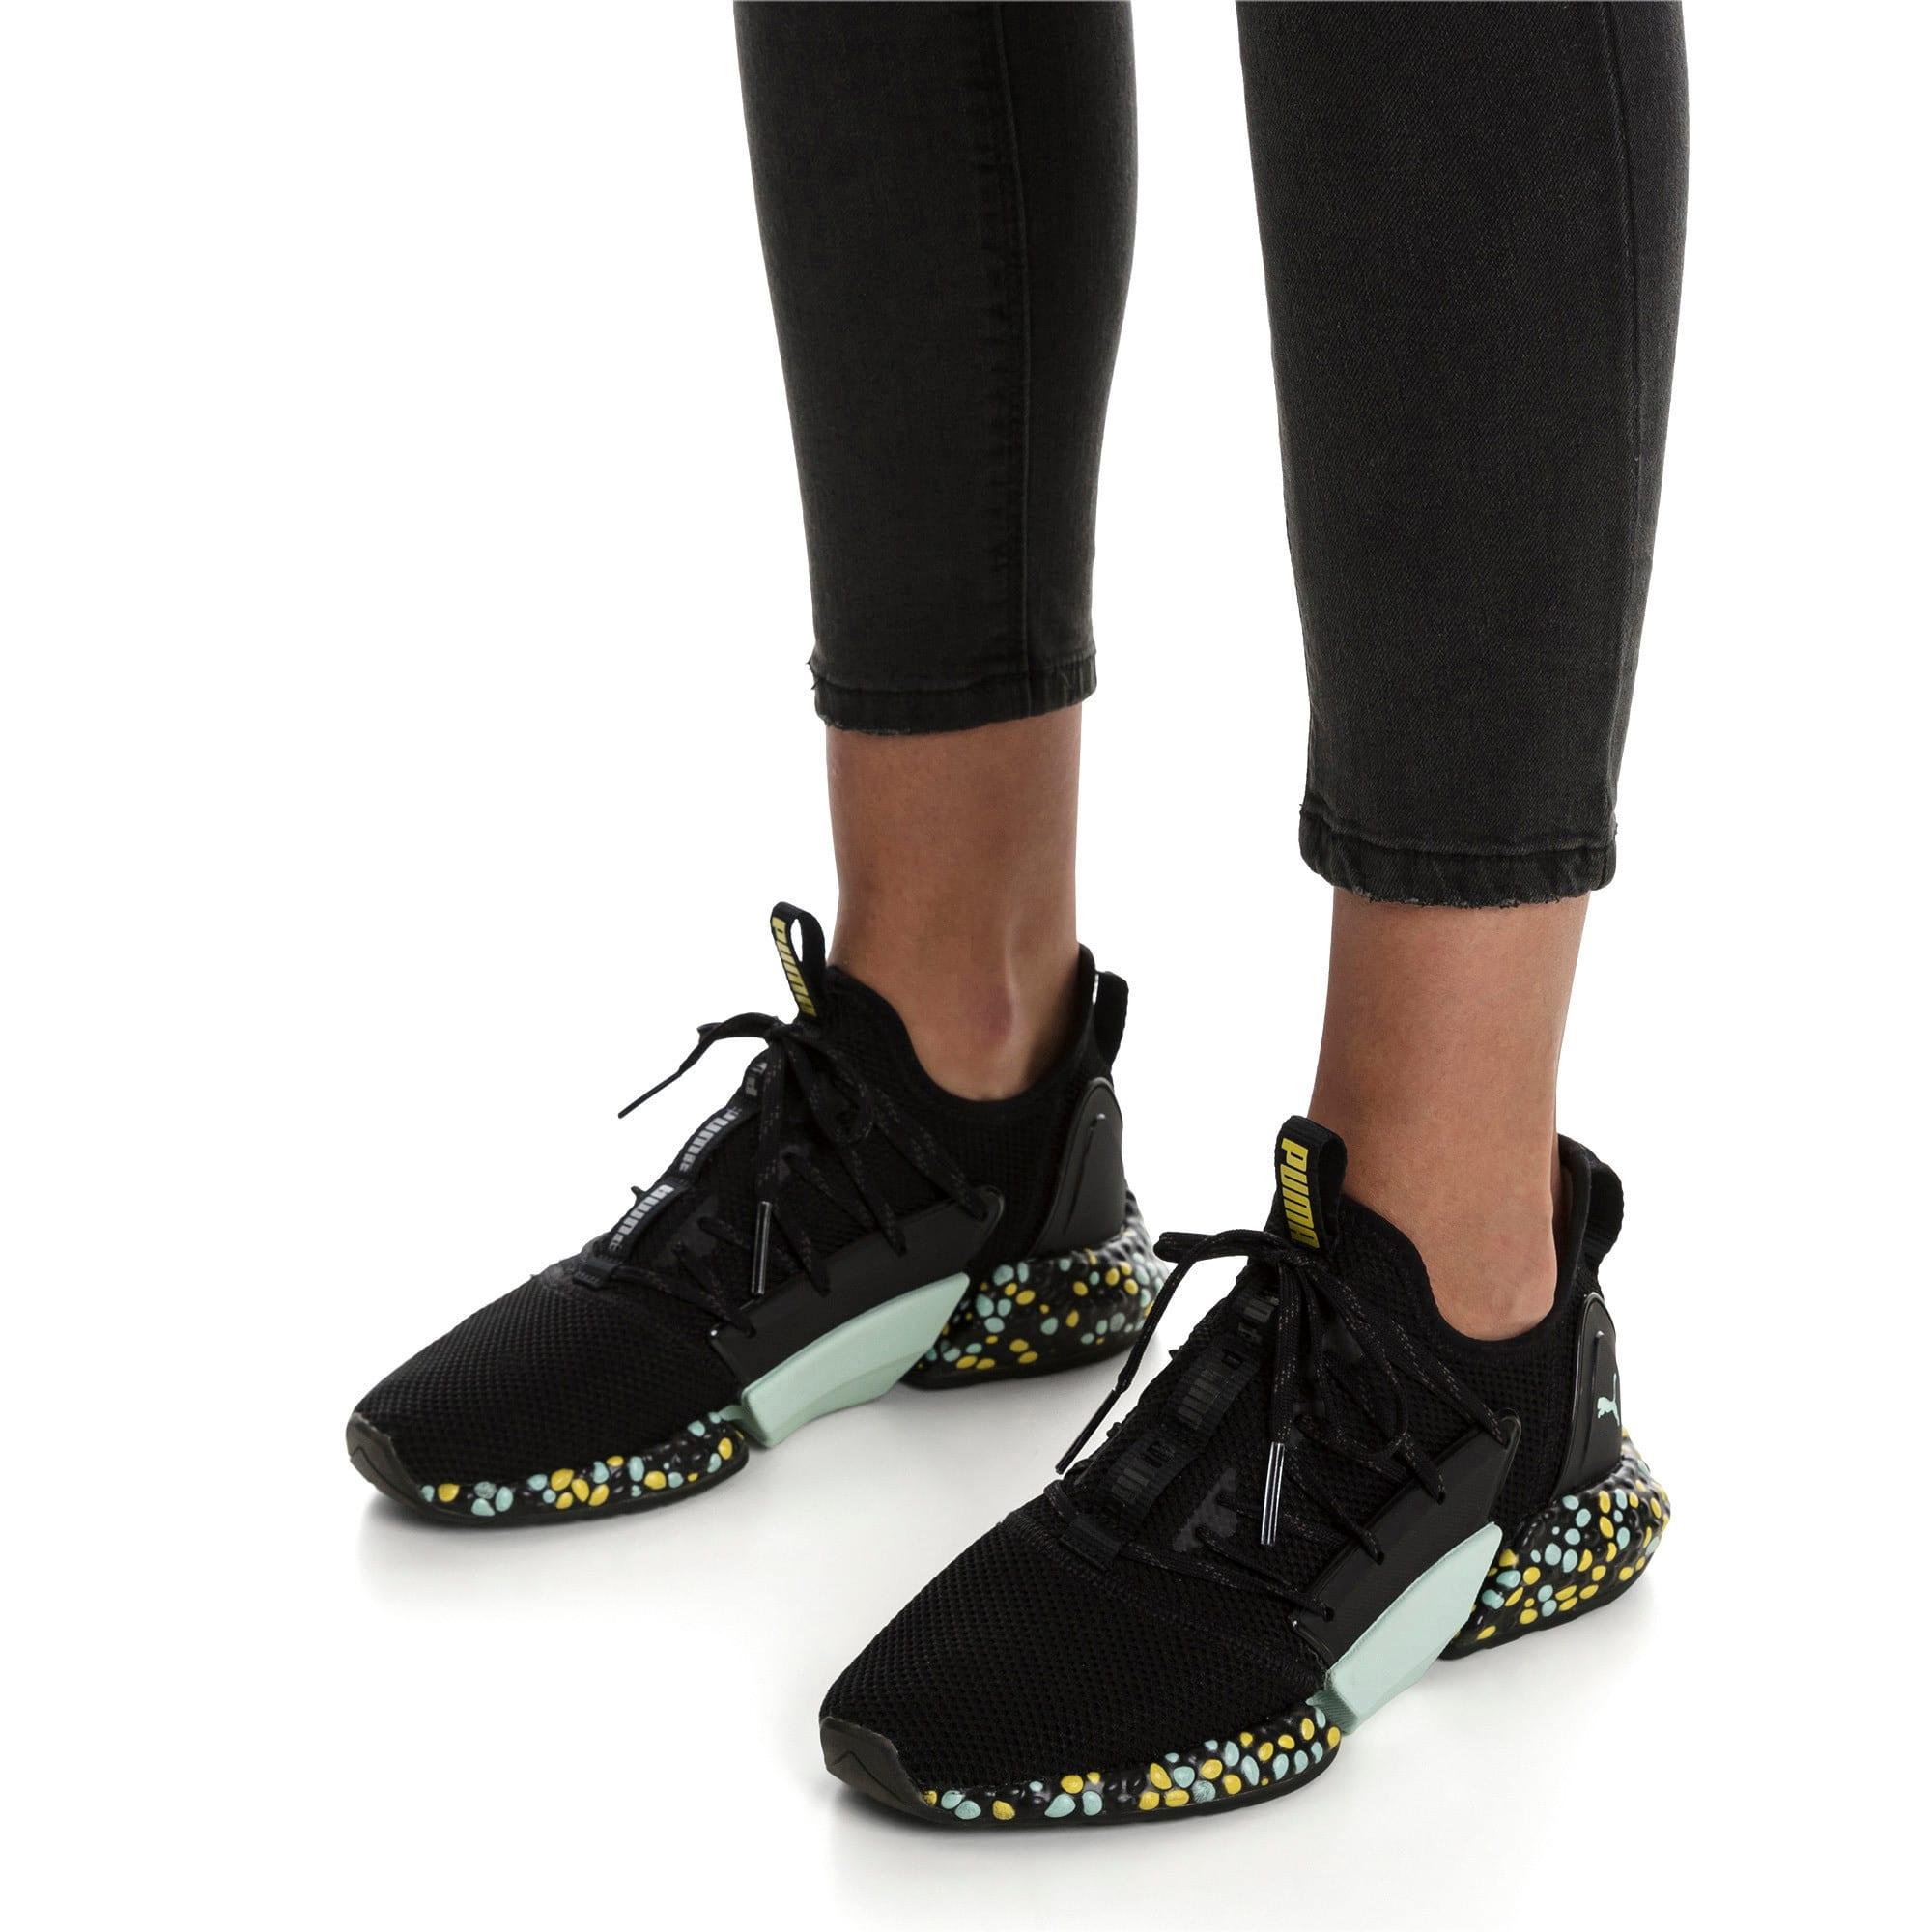 PUMA Rubber Hybrid Rocket Runner Women's Running Shoes in Black | Lyst